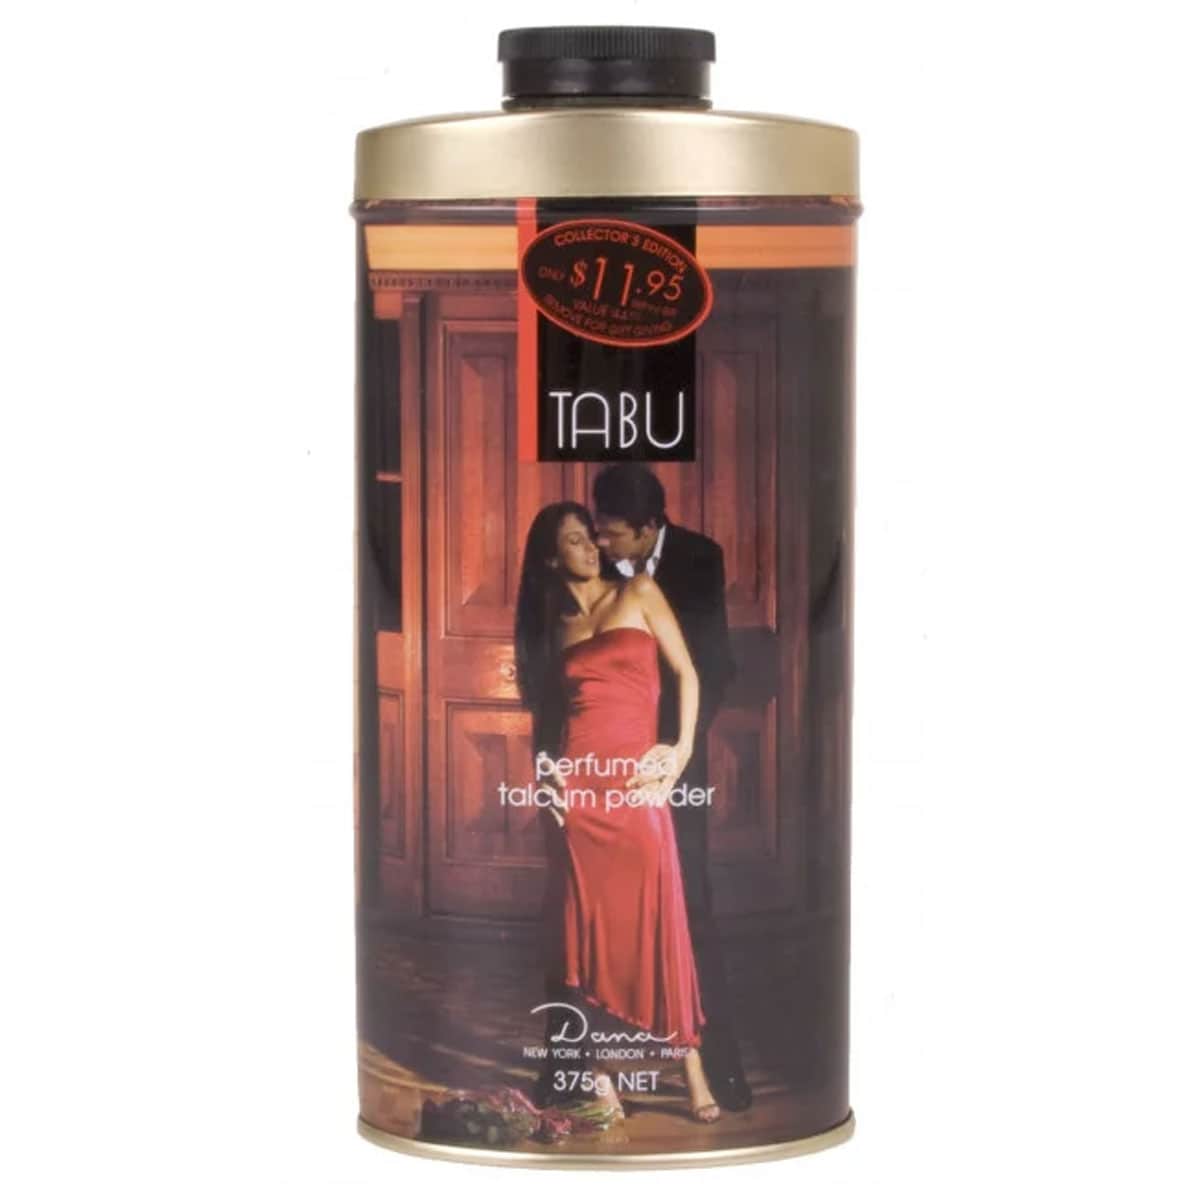 Tabu Perfumed Talcum Powder Collectors Edition 375g